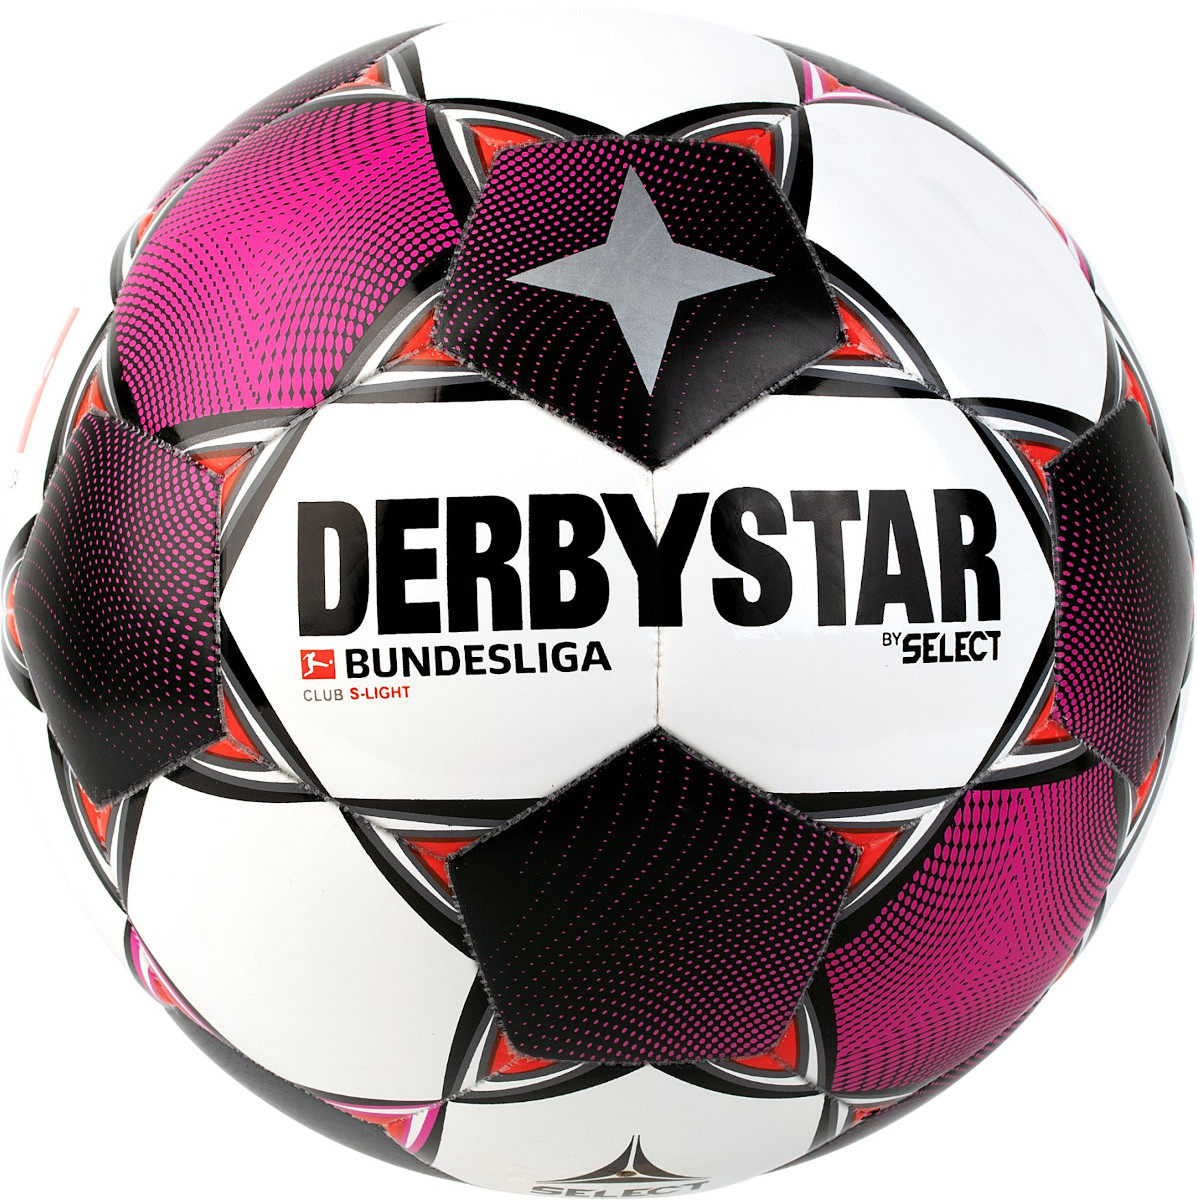 Minge Derbystar Bundesliga Club SLight 290g training ball